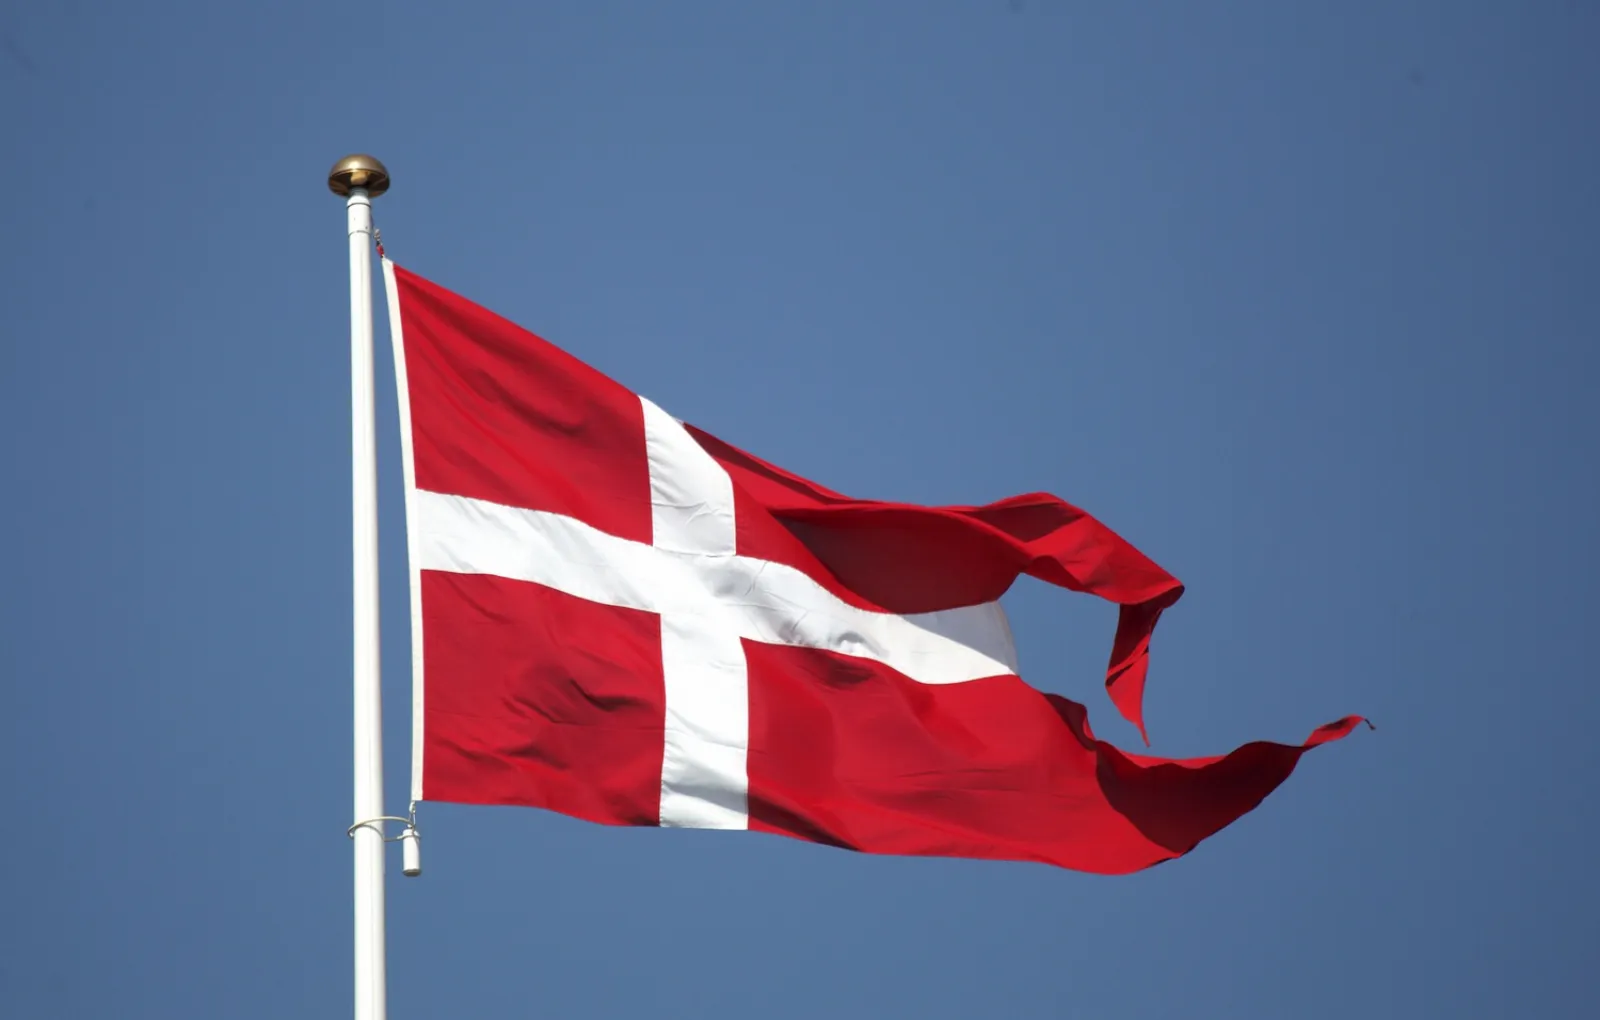 Danmark. Флаг Дании. Флаг Дании 1219. Флаг страны Дания. Национального флага Дания.